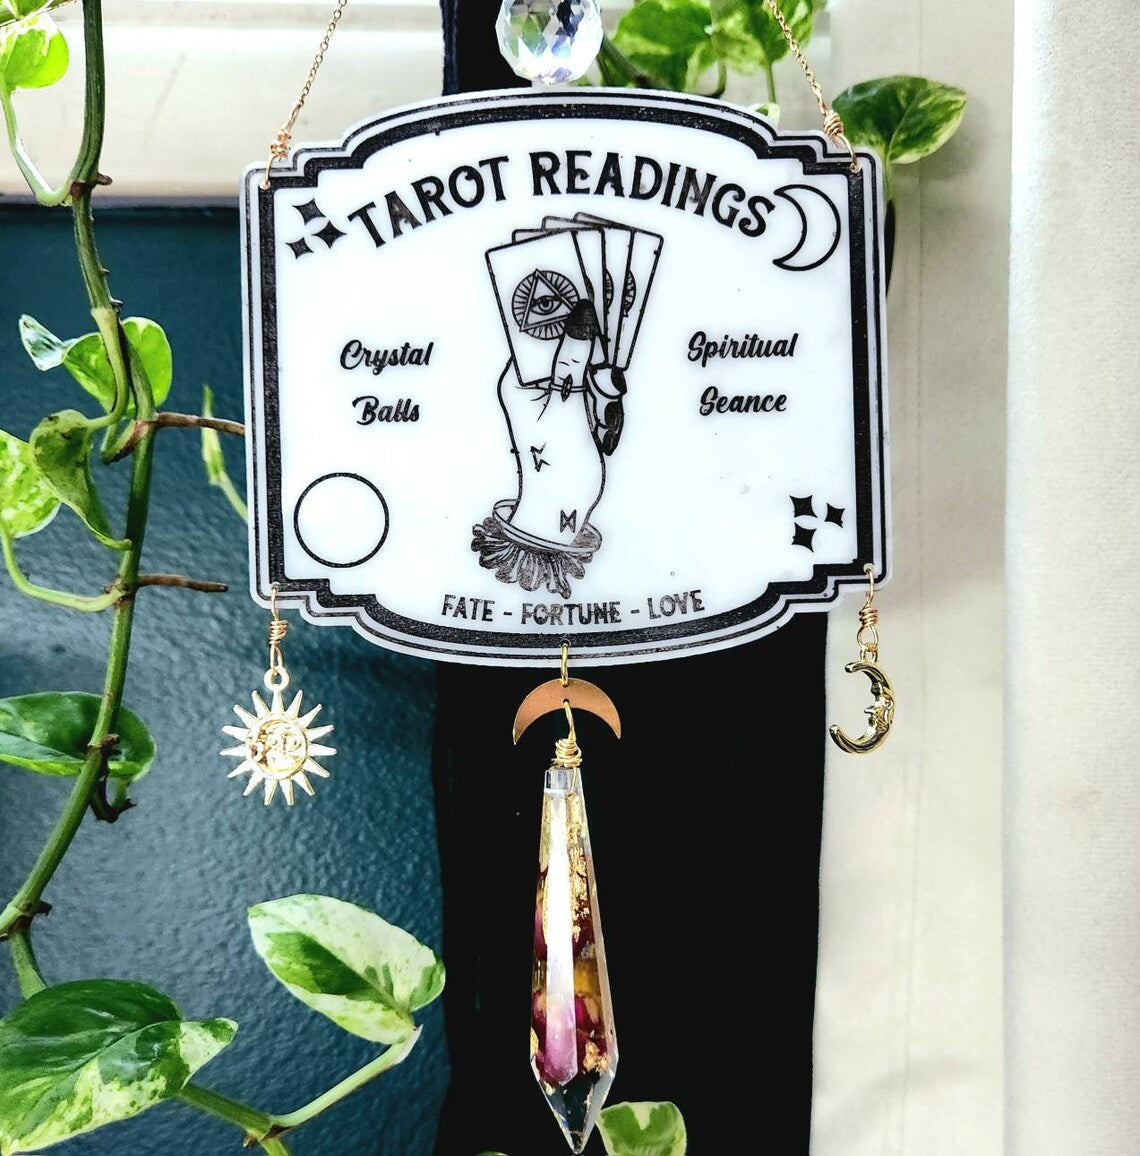 Fortune teller tarot hanging sign